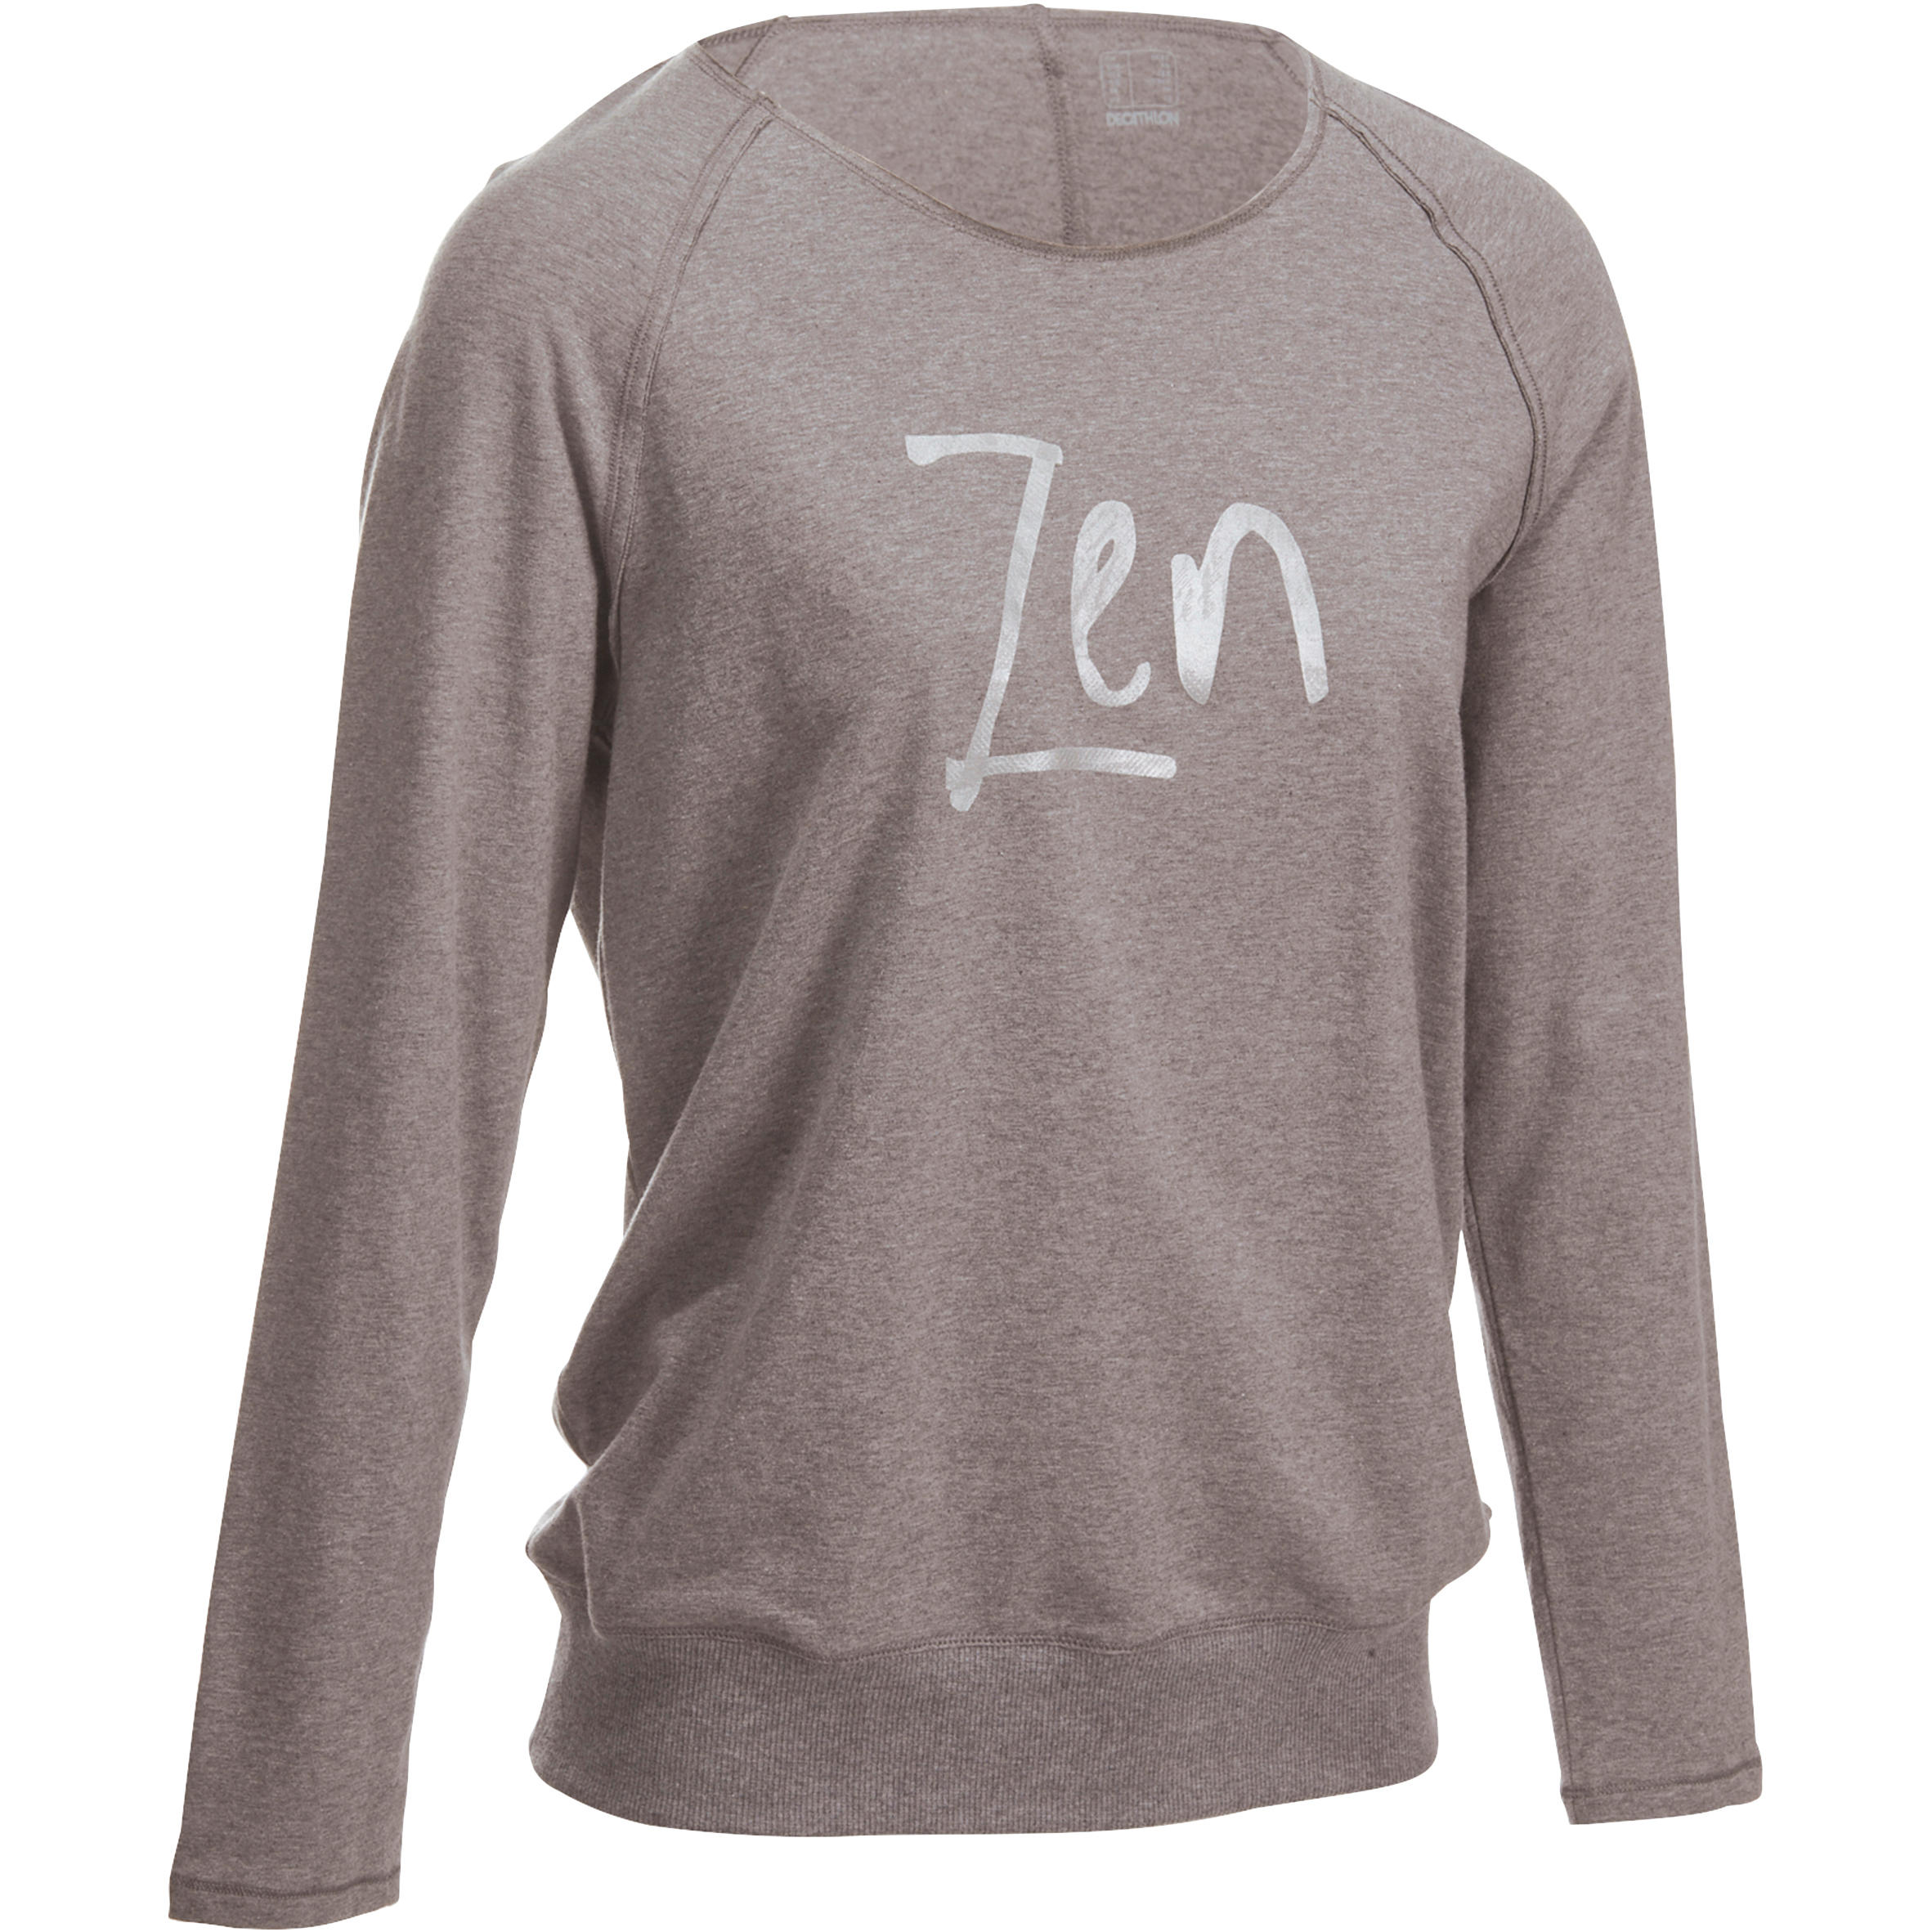 Women's Organic Cotton Long-Sleeved Yoga T-Shirt - Mottled Grey 1/12